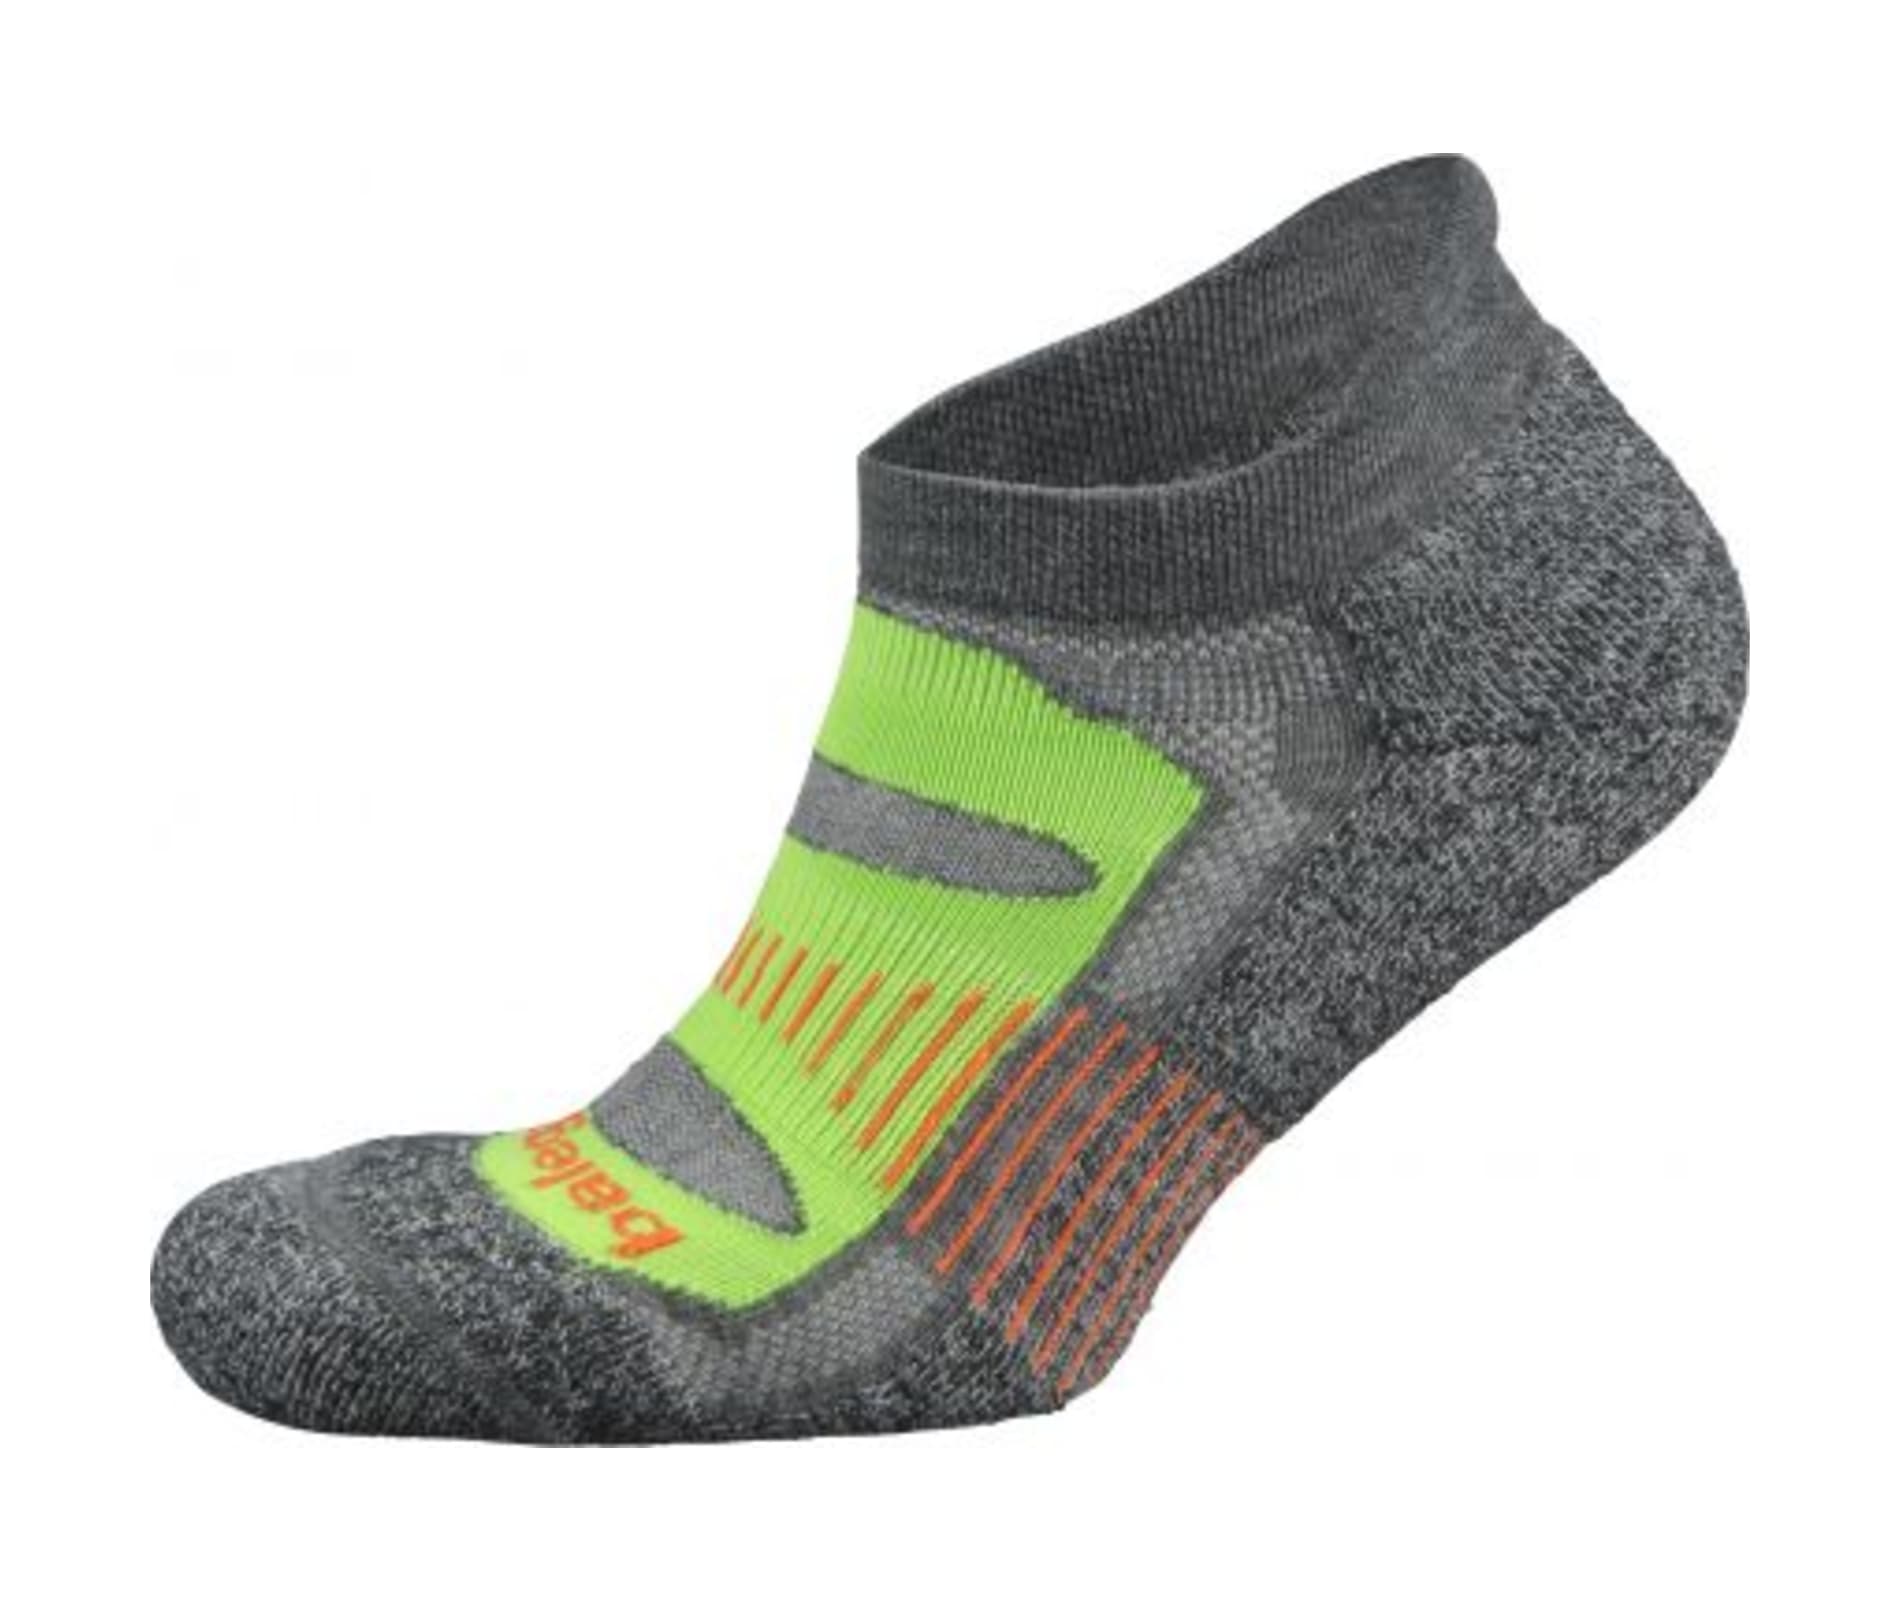 Balega Blister Resist Socks Charcoal - Lime - XL